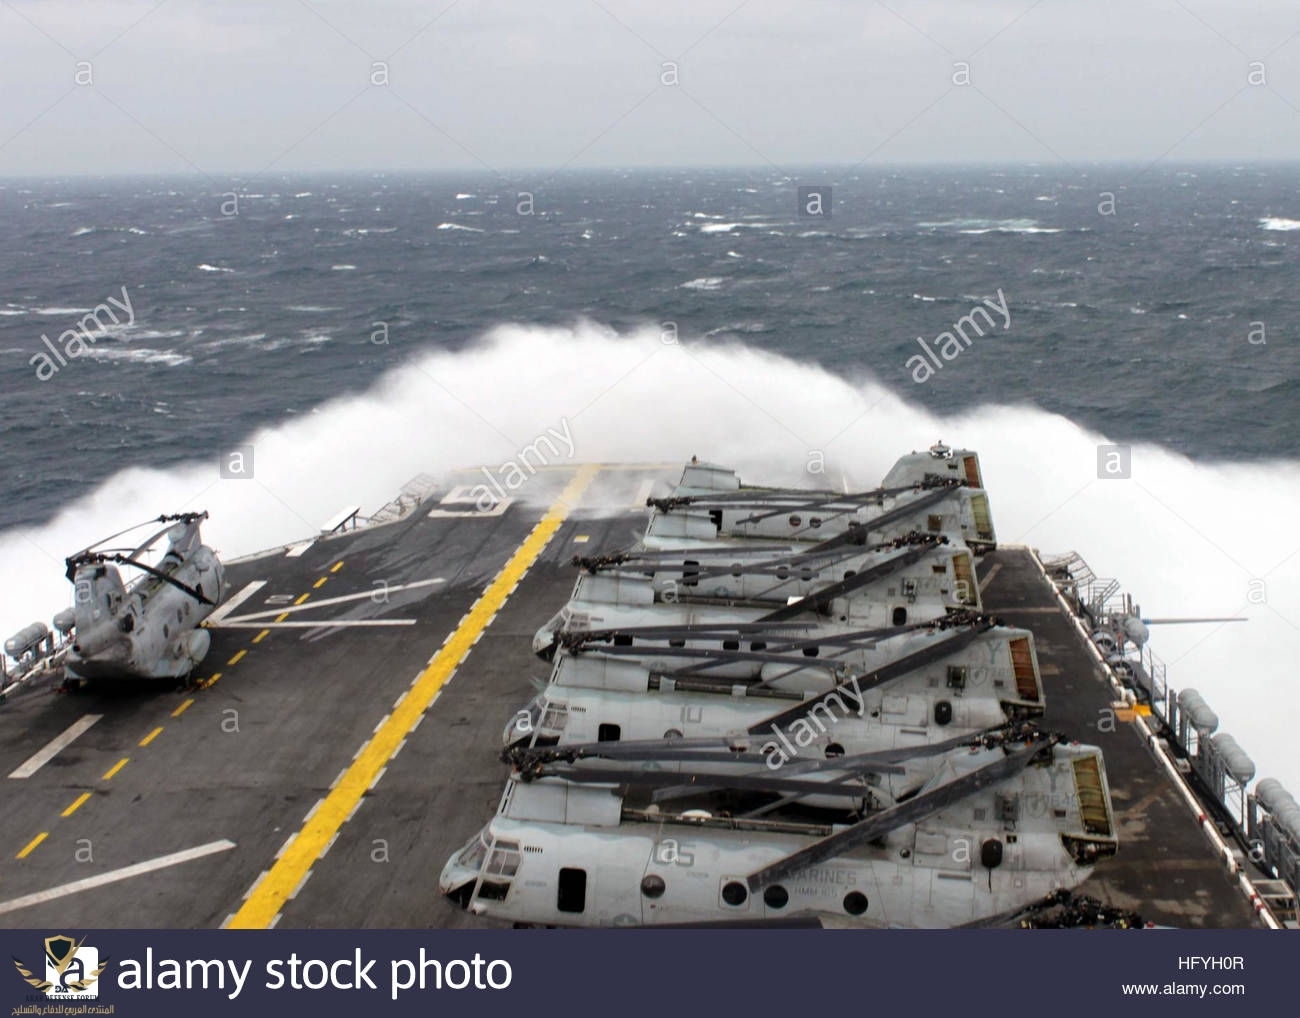 the-amphibious-assault-ship-uss-peleliu-lha-5-transits-the-south-pacific-HFYH0R.jpg